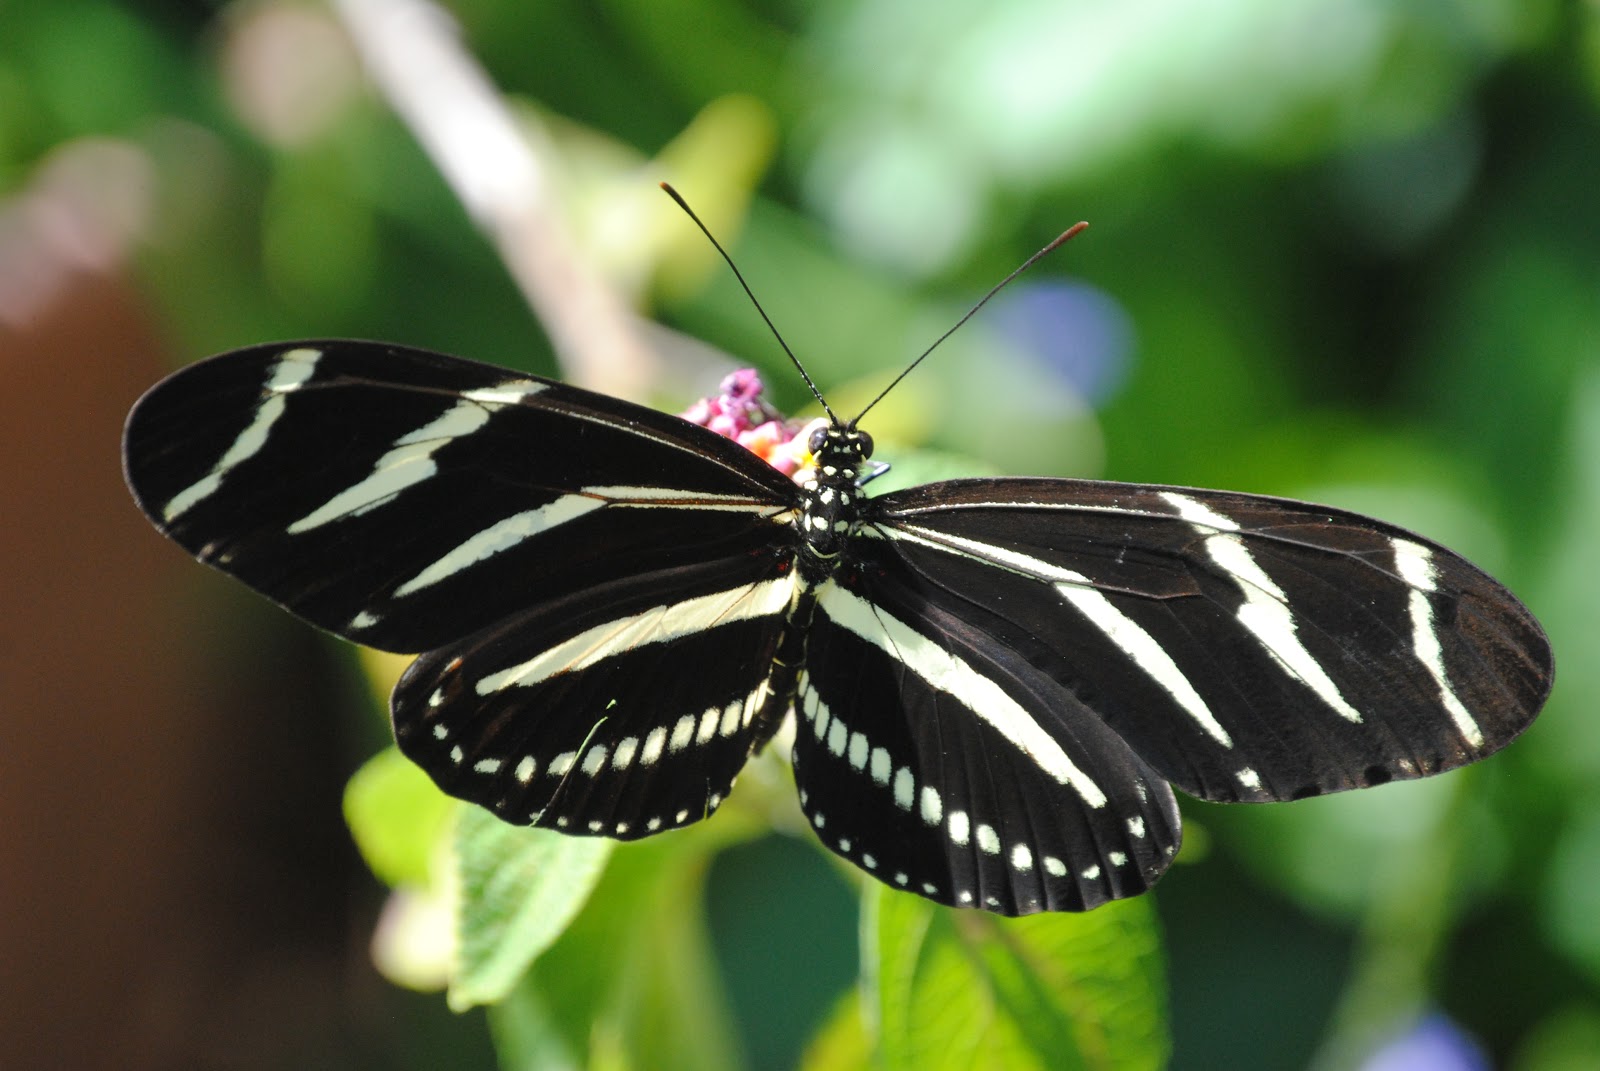 Field Notes and Photos: Florida Fall Butterflies